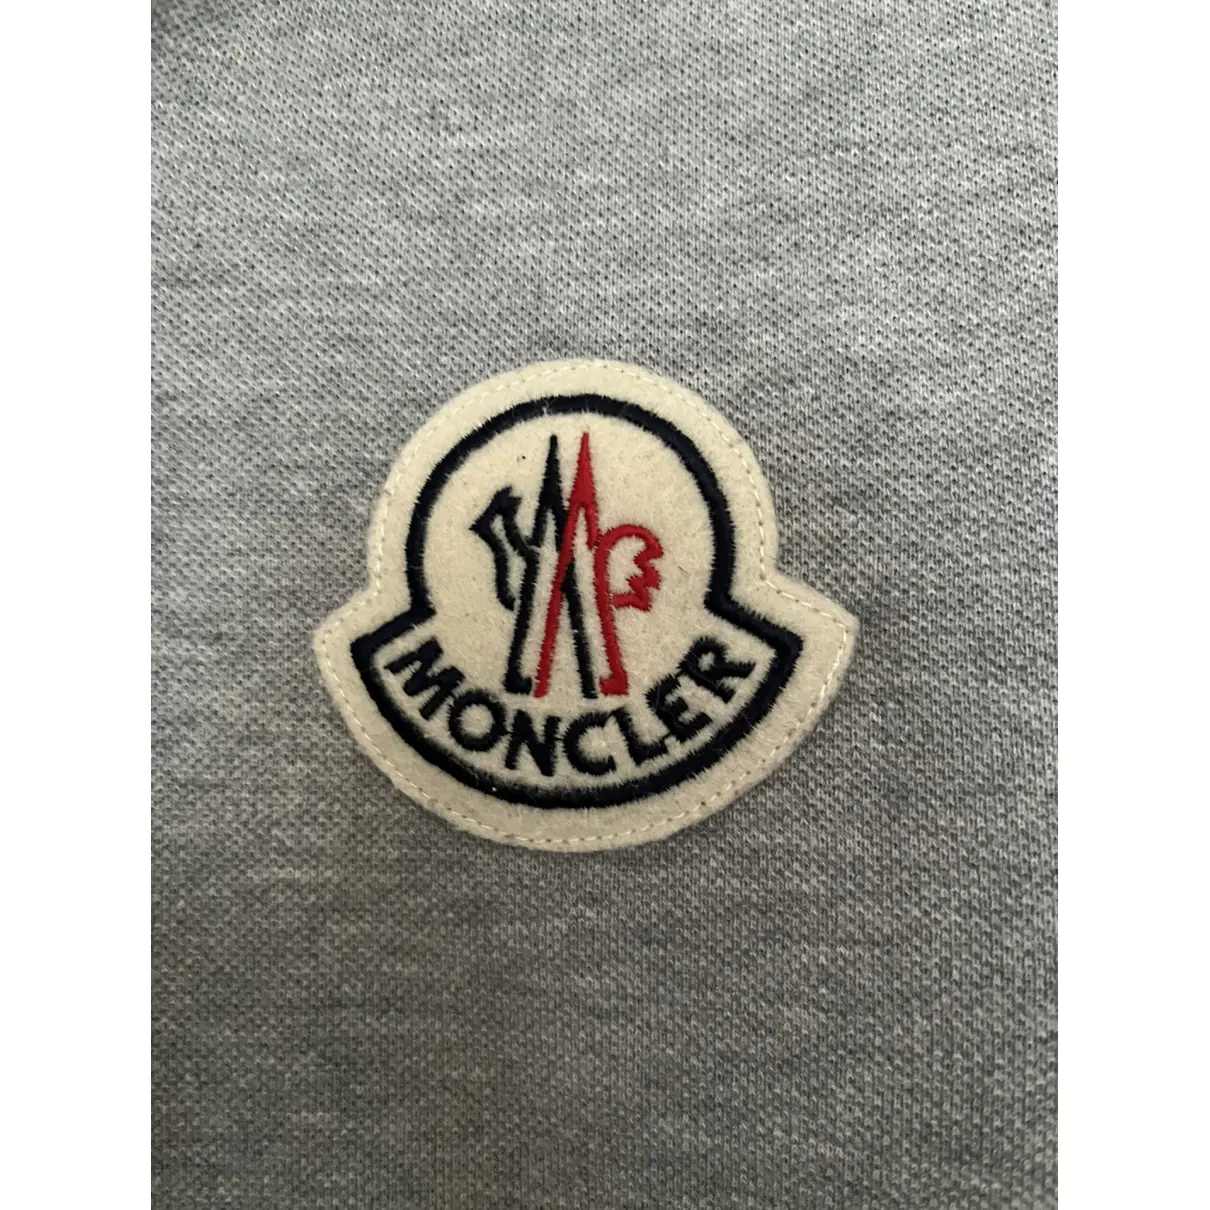 Buy Moncler Polo online